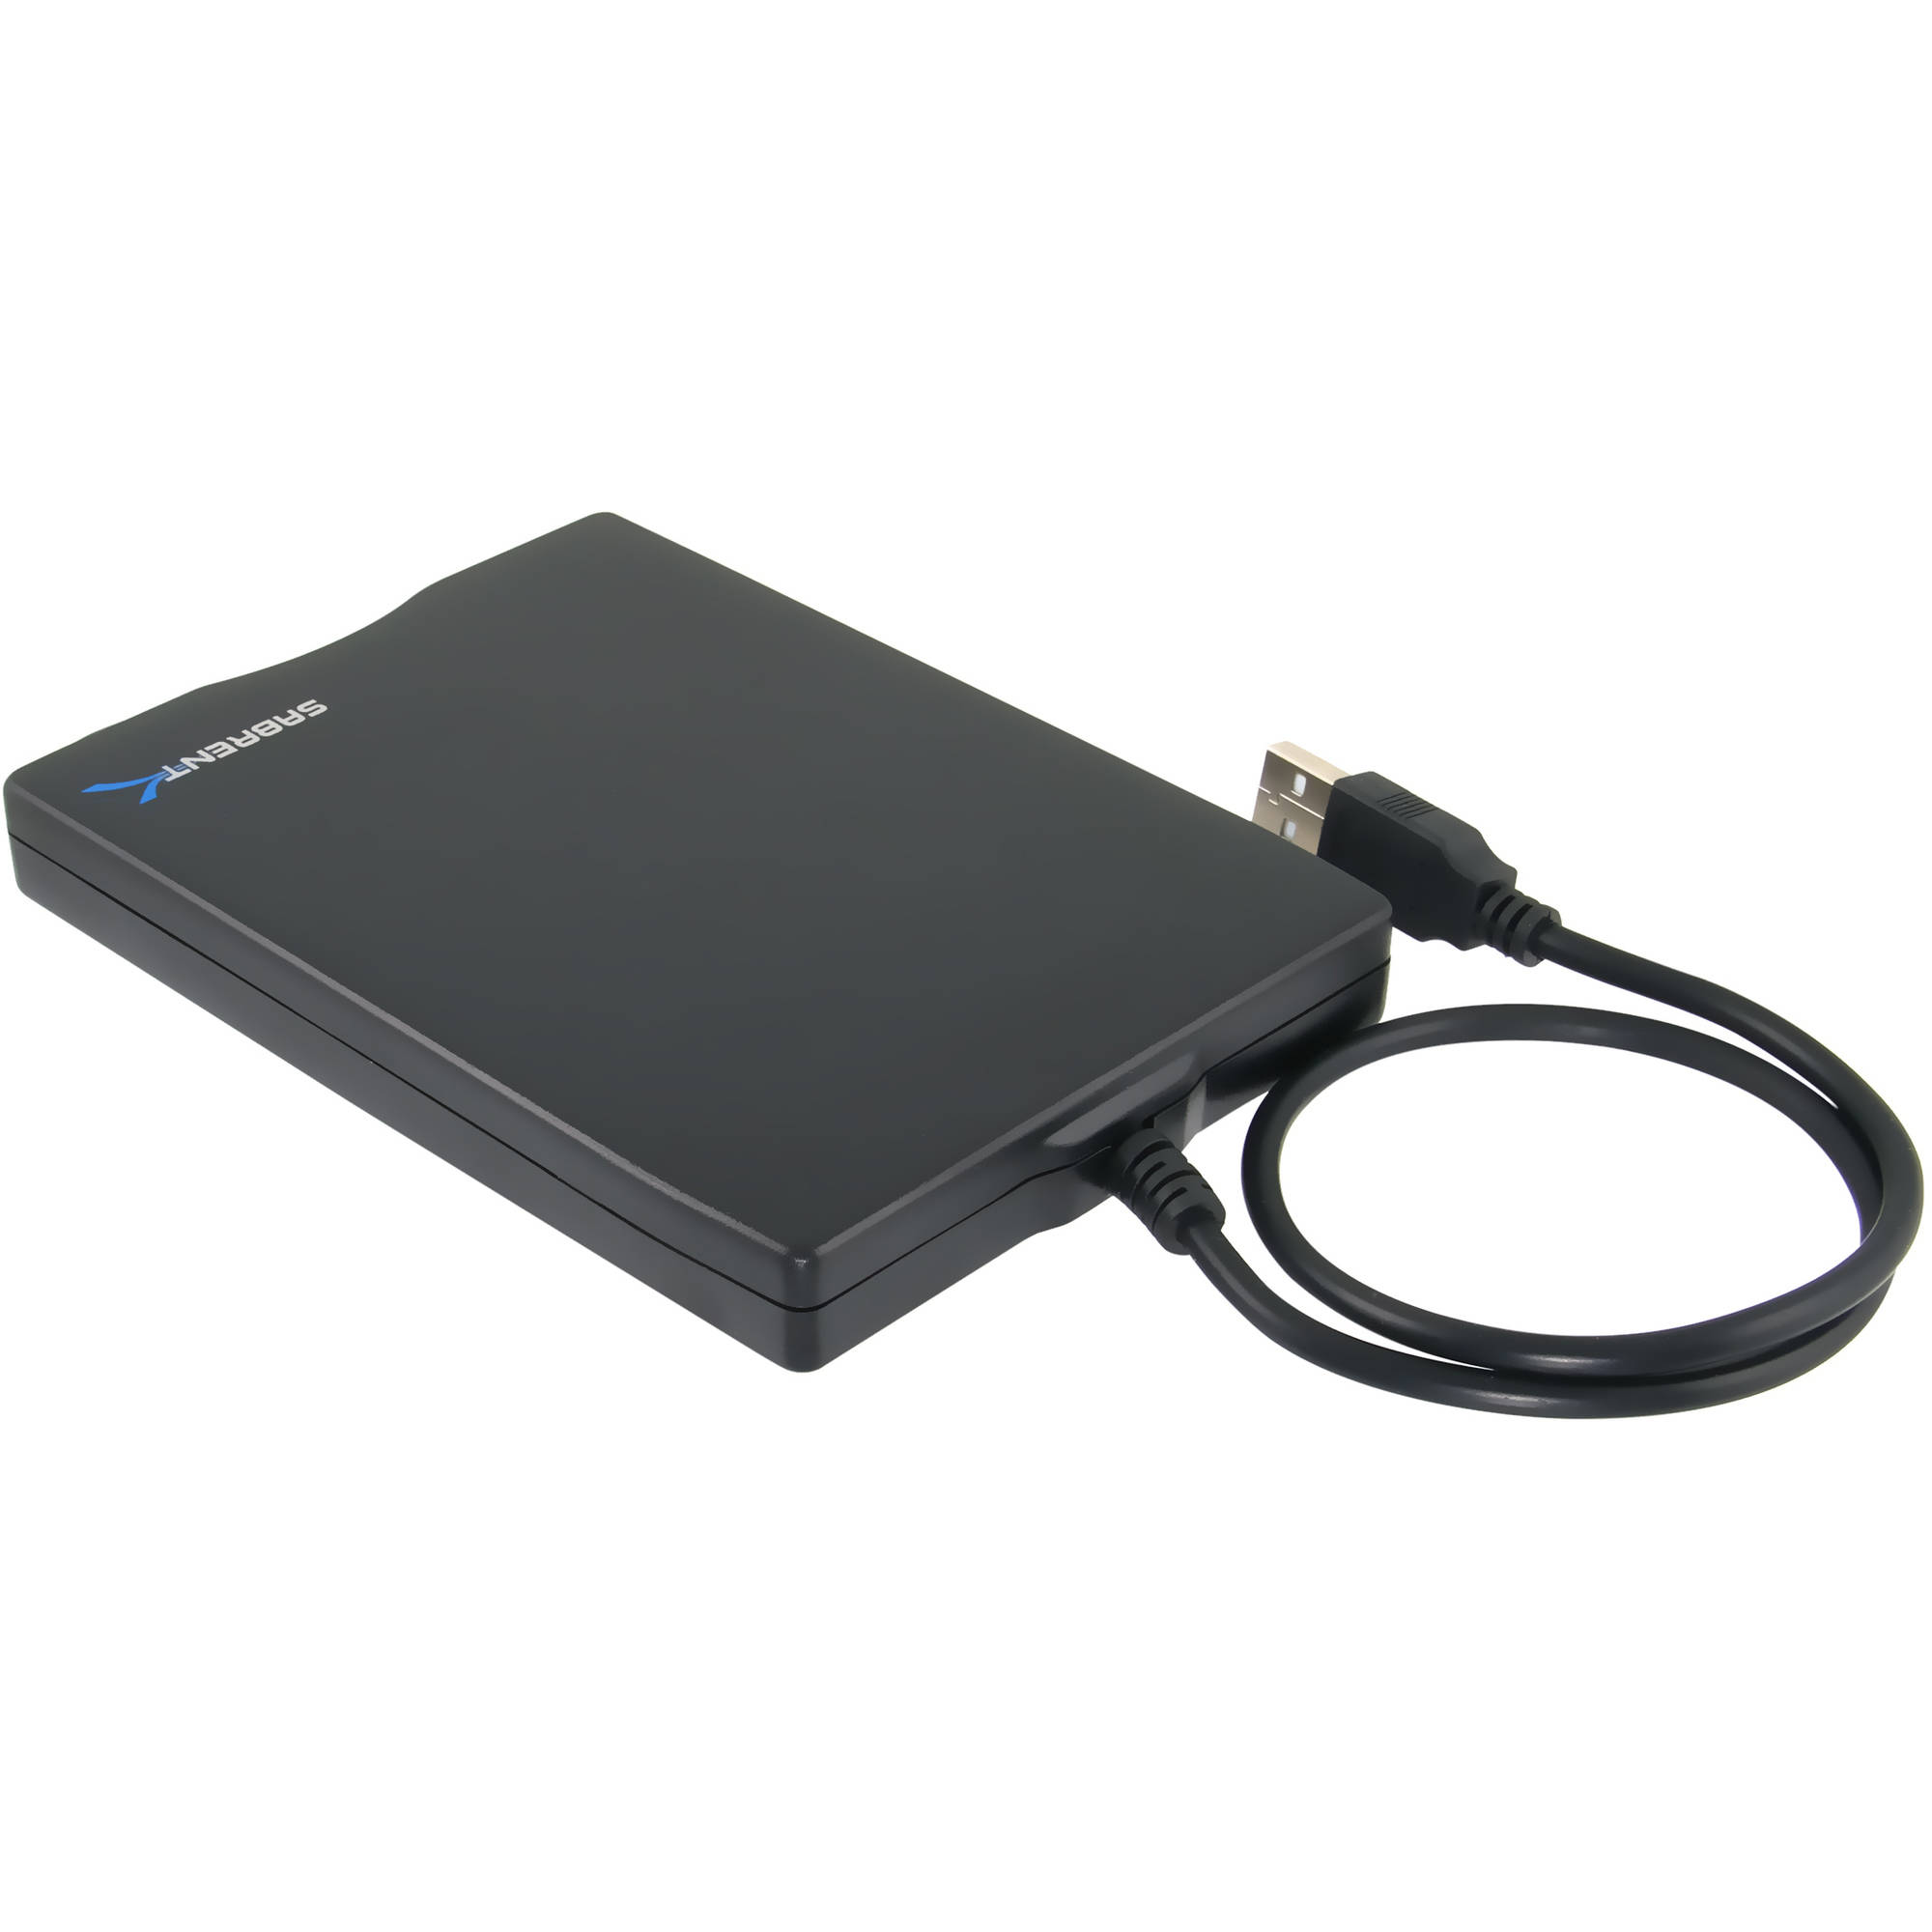 Sabrent USB 1.44MB FLOPPY DRIVE PORTABLE BLACK - image 2 of 5